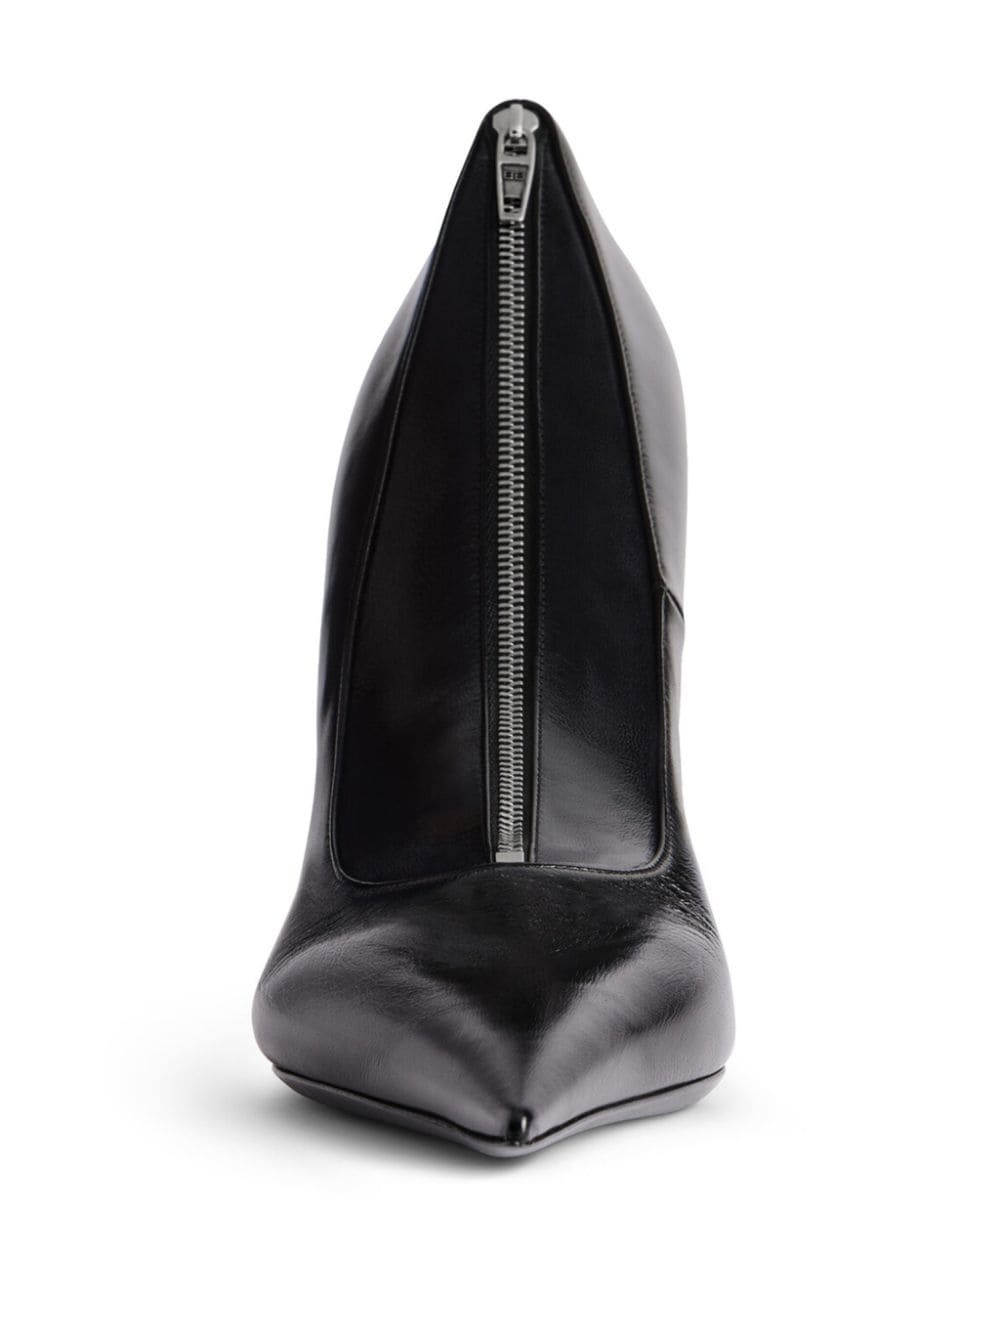 Shoe Knife leather clutch bag - 3